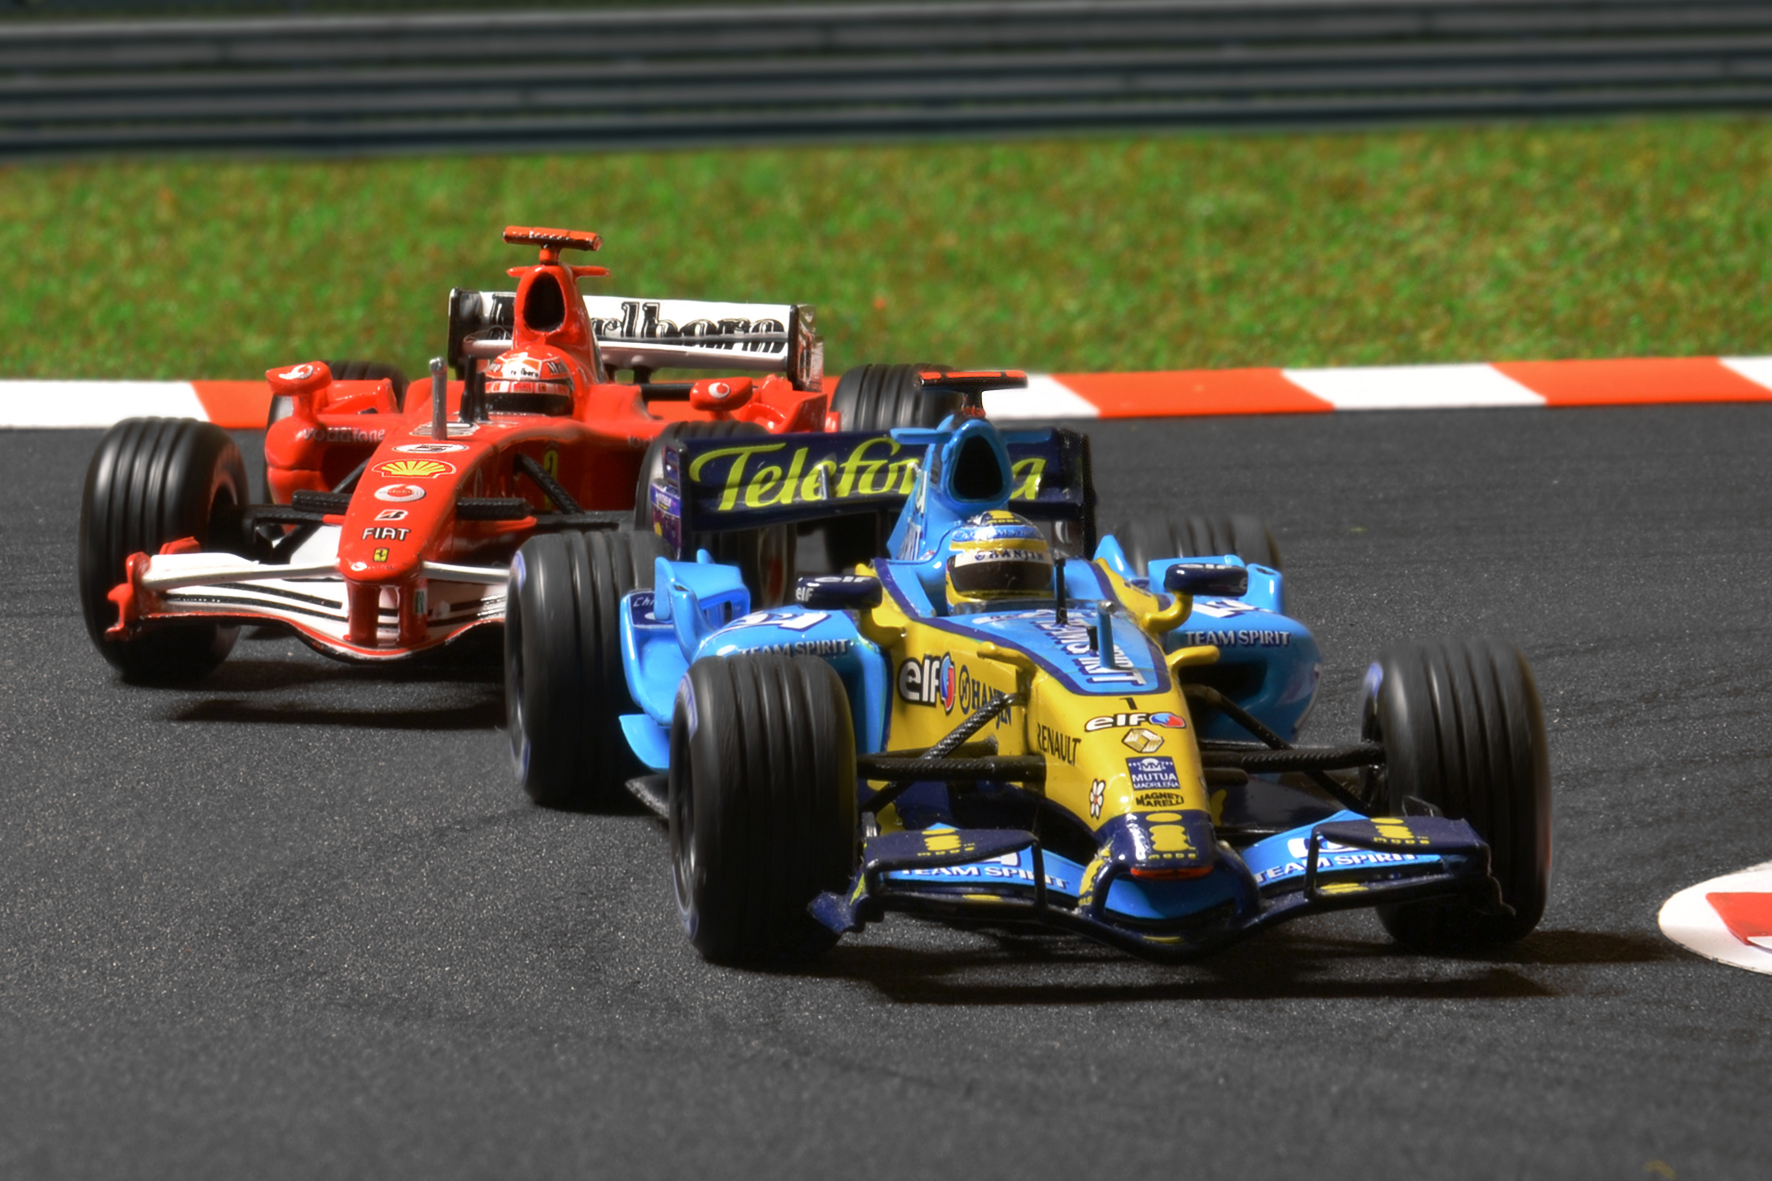 Renault R26 Fernando Alonso vs Ferrari 248F1 Michael Schumacher 2006 - Minichamps & Hot Wheels 1:43